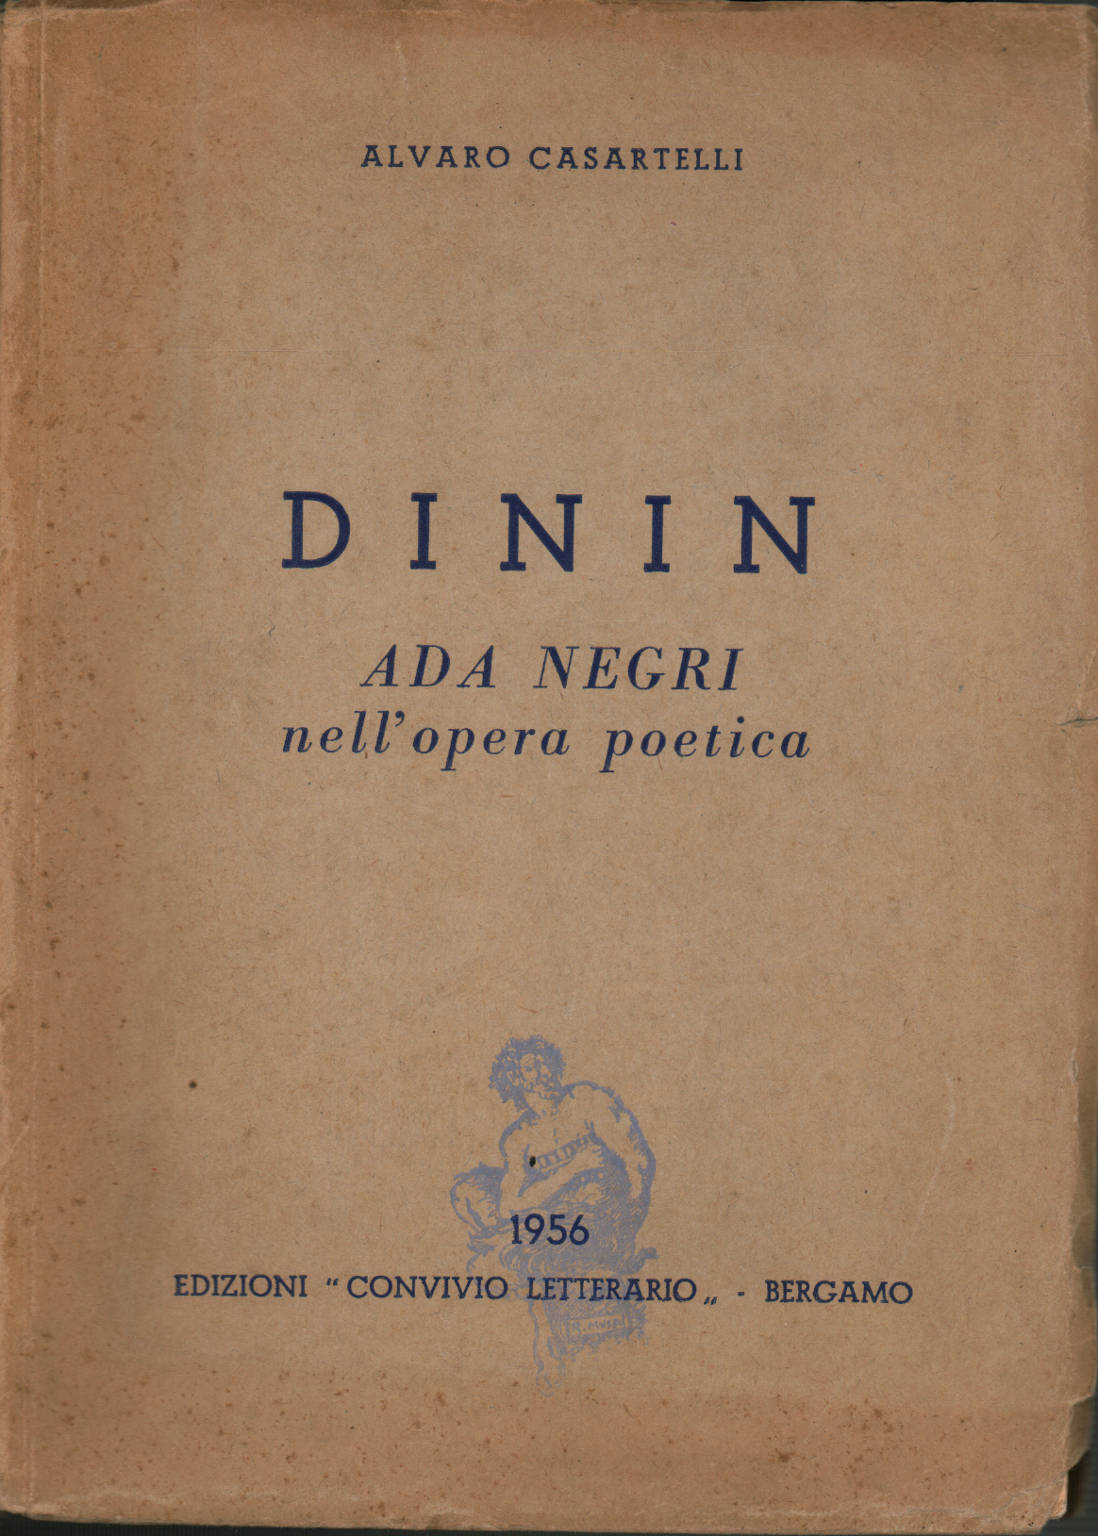 Dinin. Ada Negri nell'opera poetica, s.a.